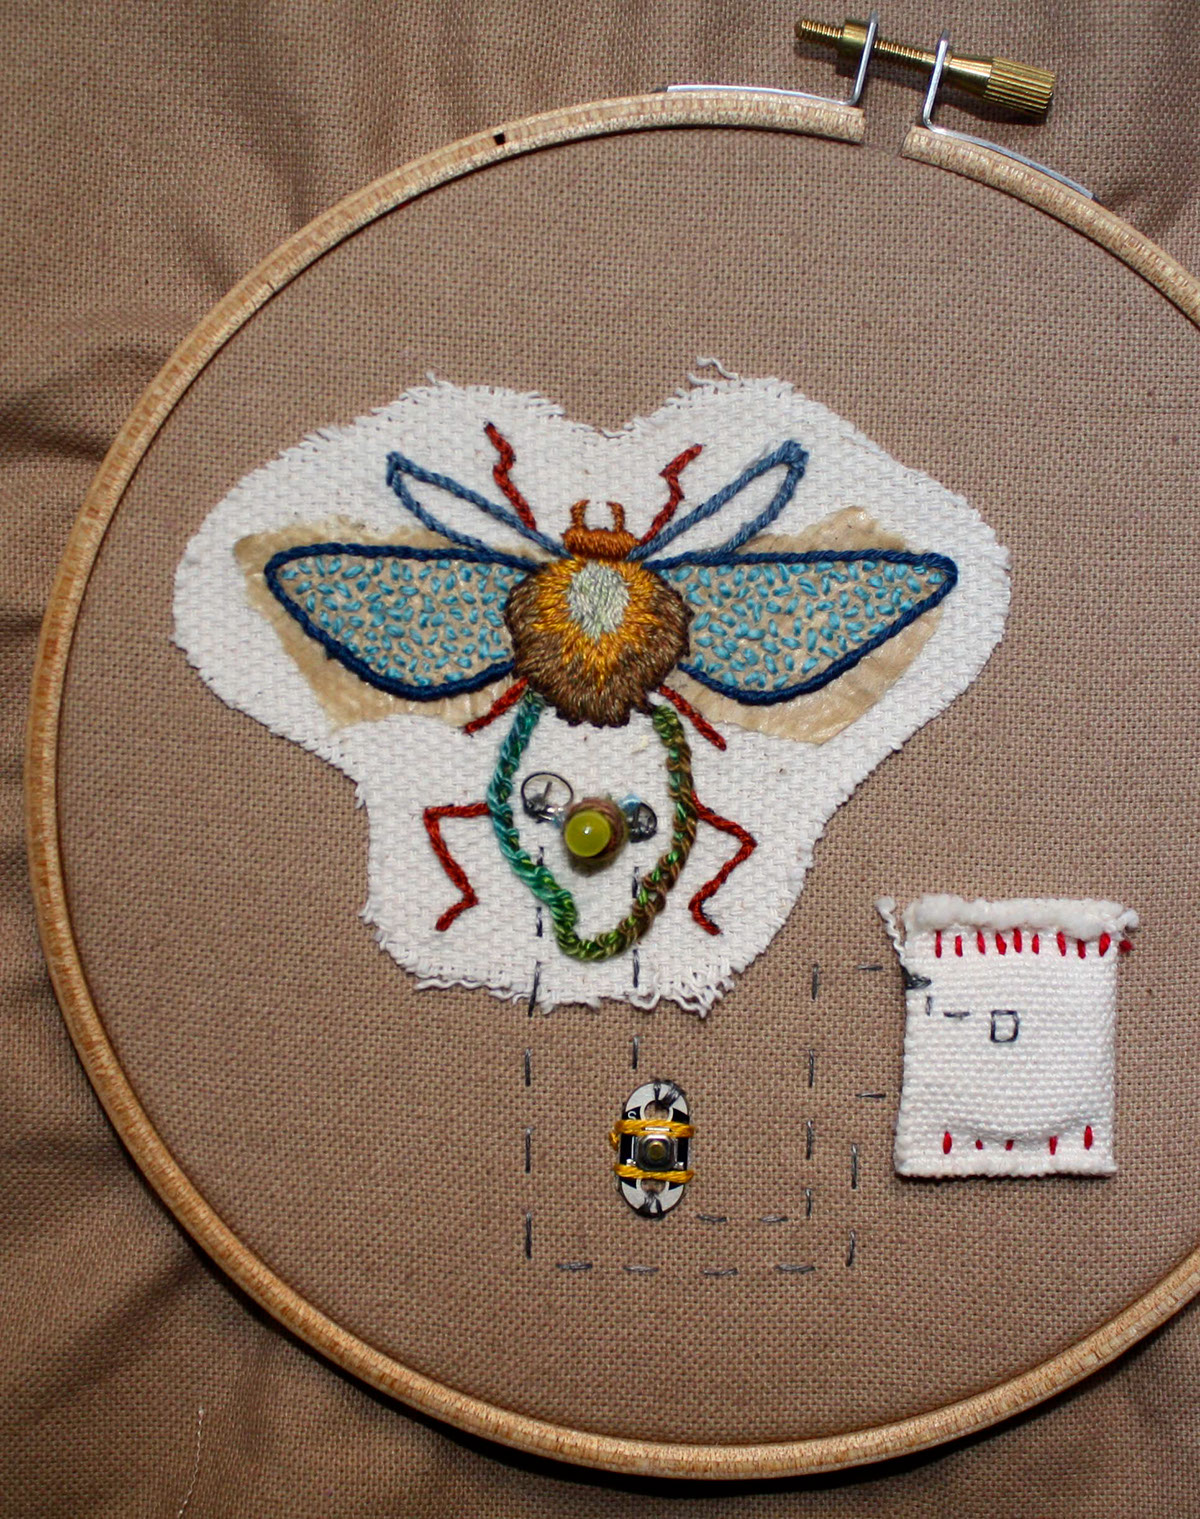 Embroidery E-Textiles gimenaromero Insects moth butterfly watercolor MixMedia vivencialillustration textileillustration imágentextil entomology